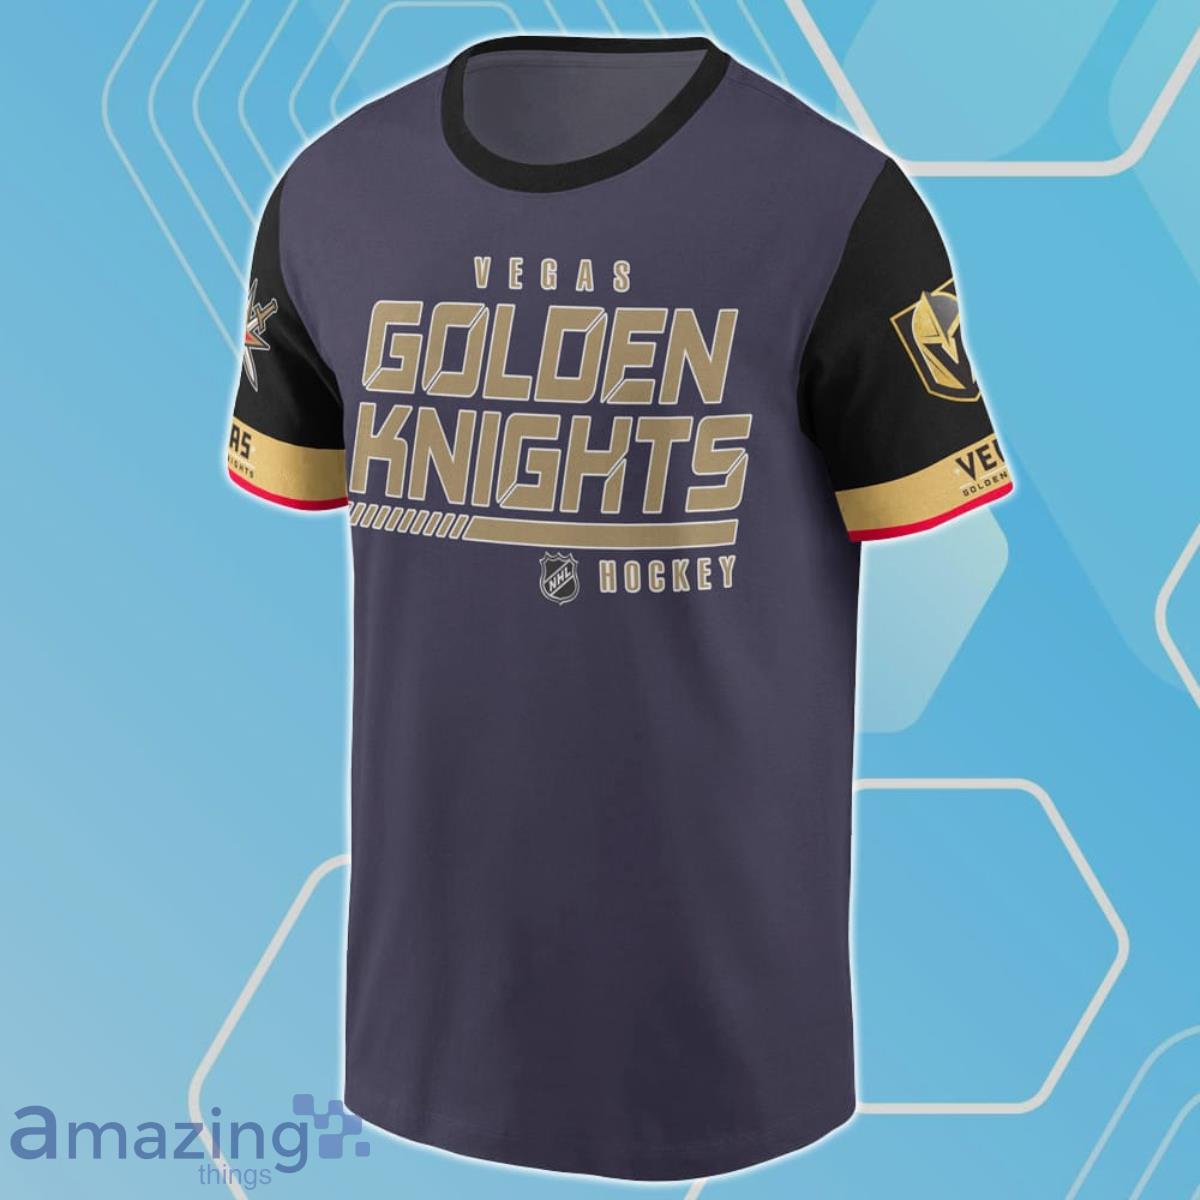 Theodore 27 Vegas Golden Knights Retro Unisex Jersey Long Sleeve Shirt -  Vegas Sports Shop